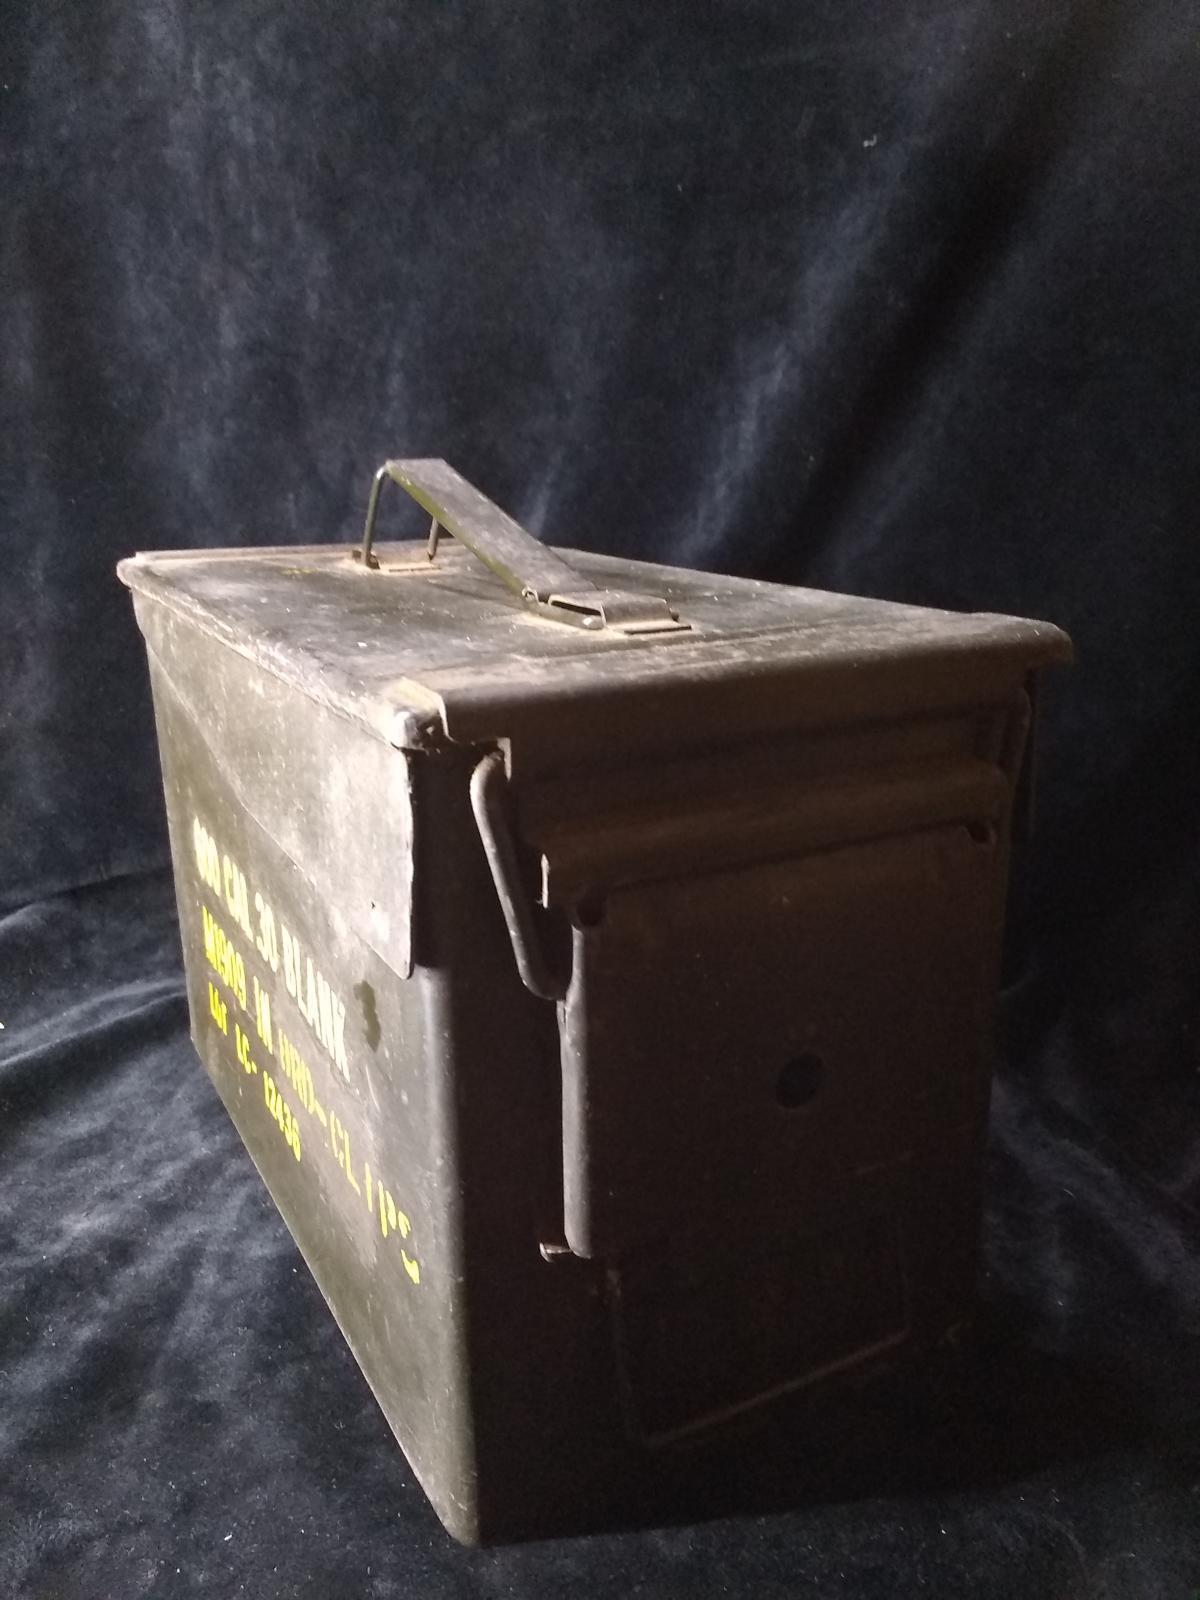 Vintage Metal Military Ammo Box